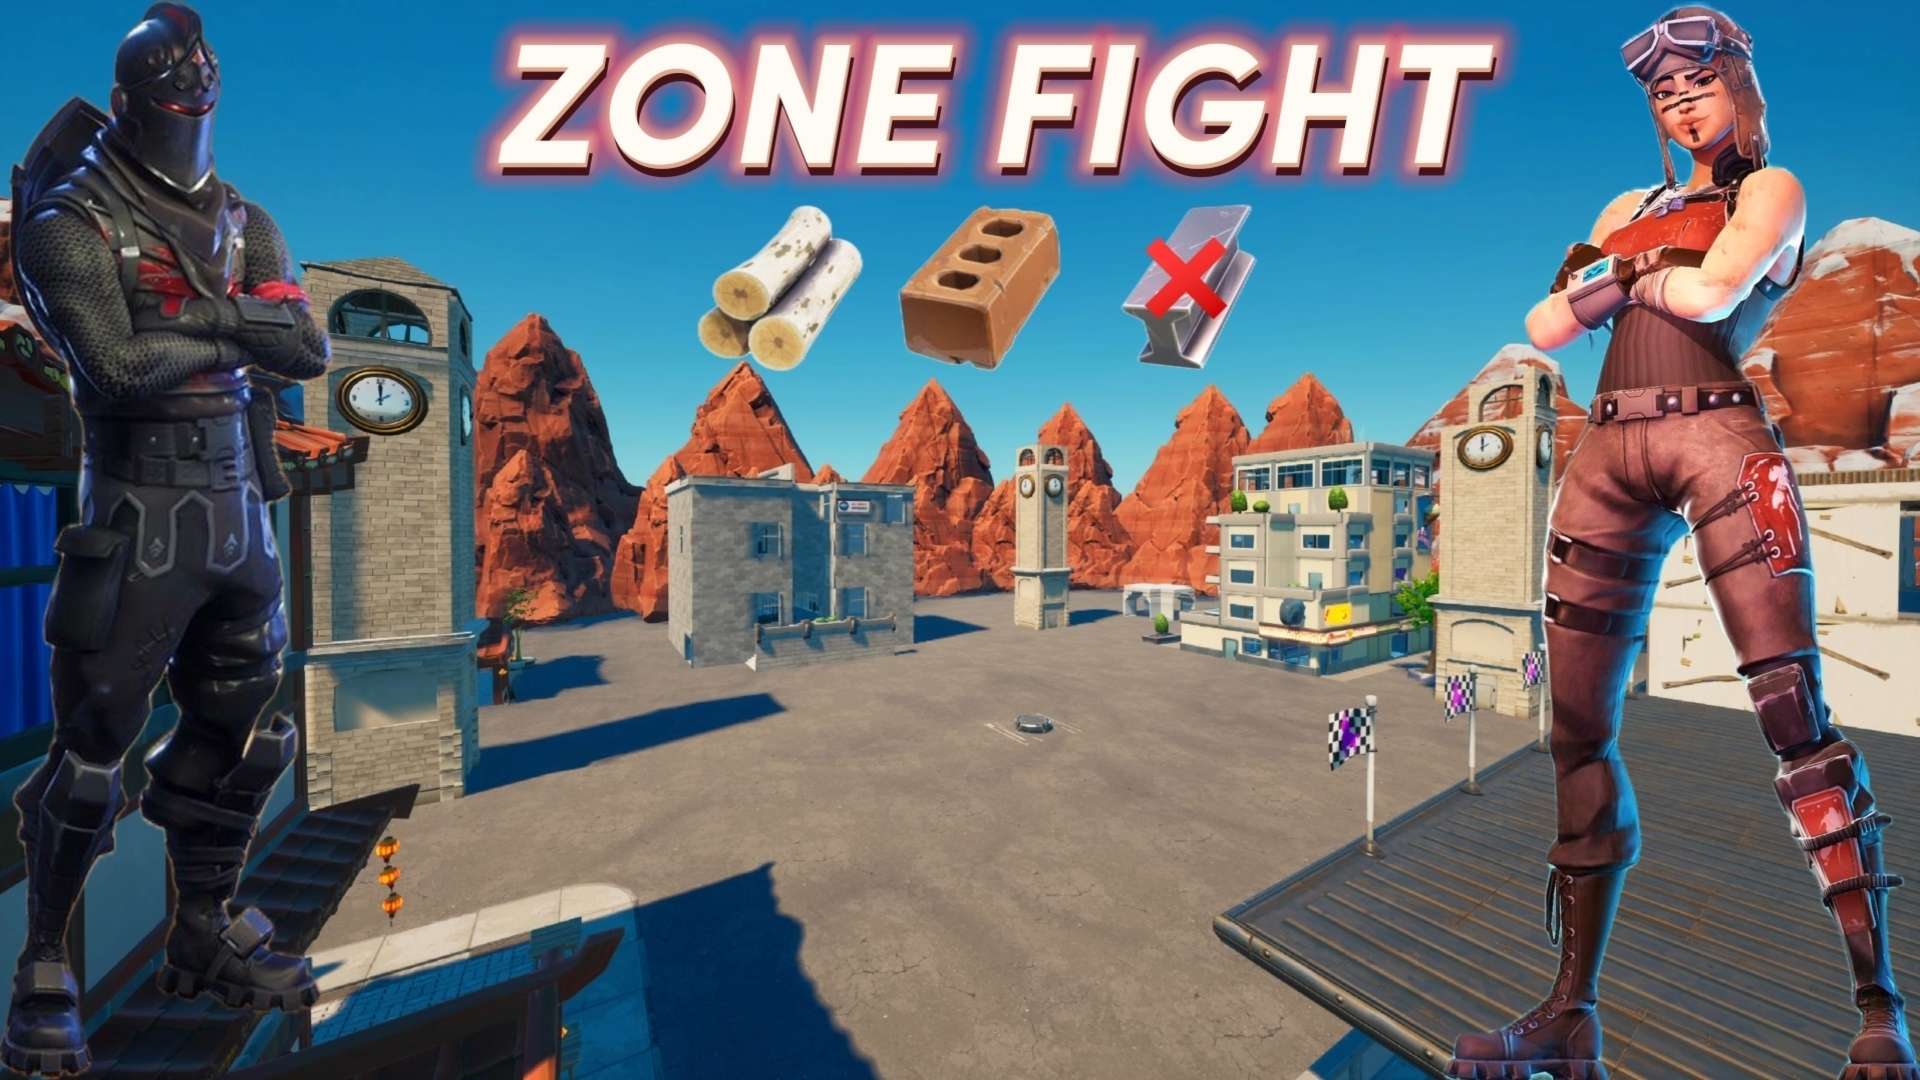 Zone fight 0634-2744-1372